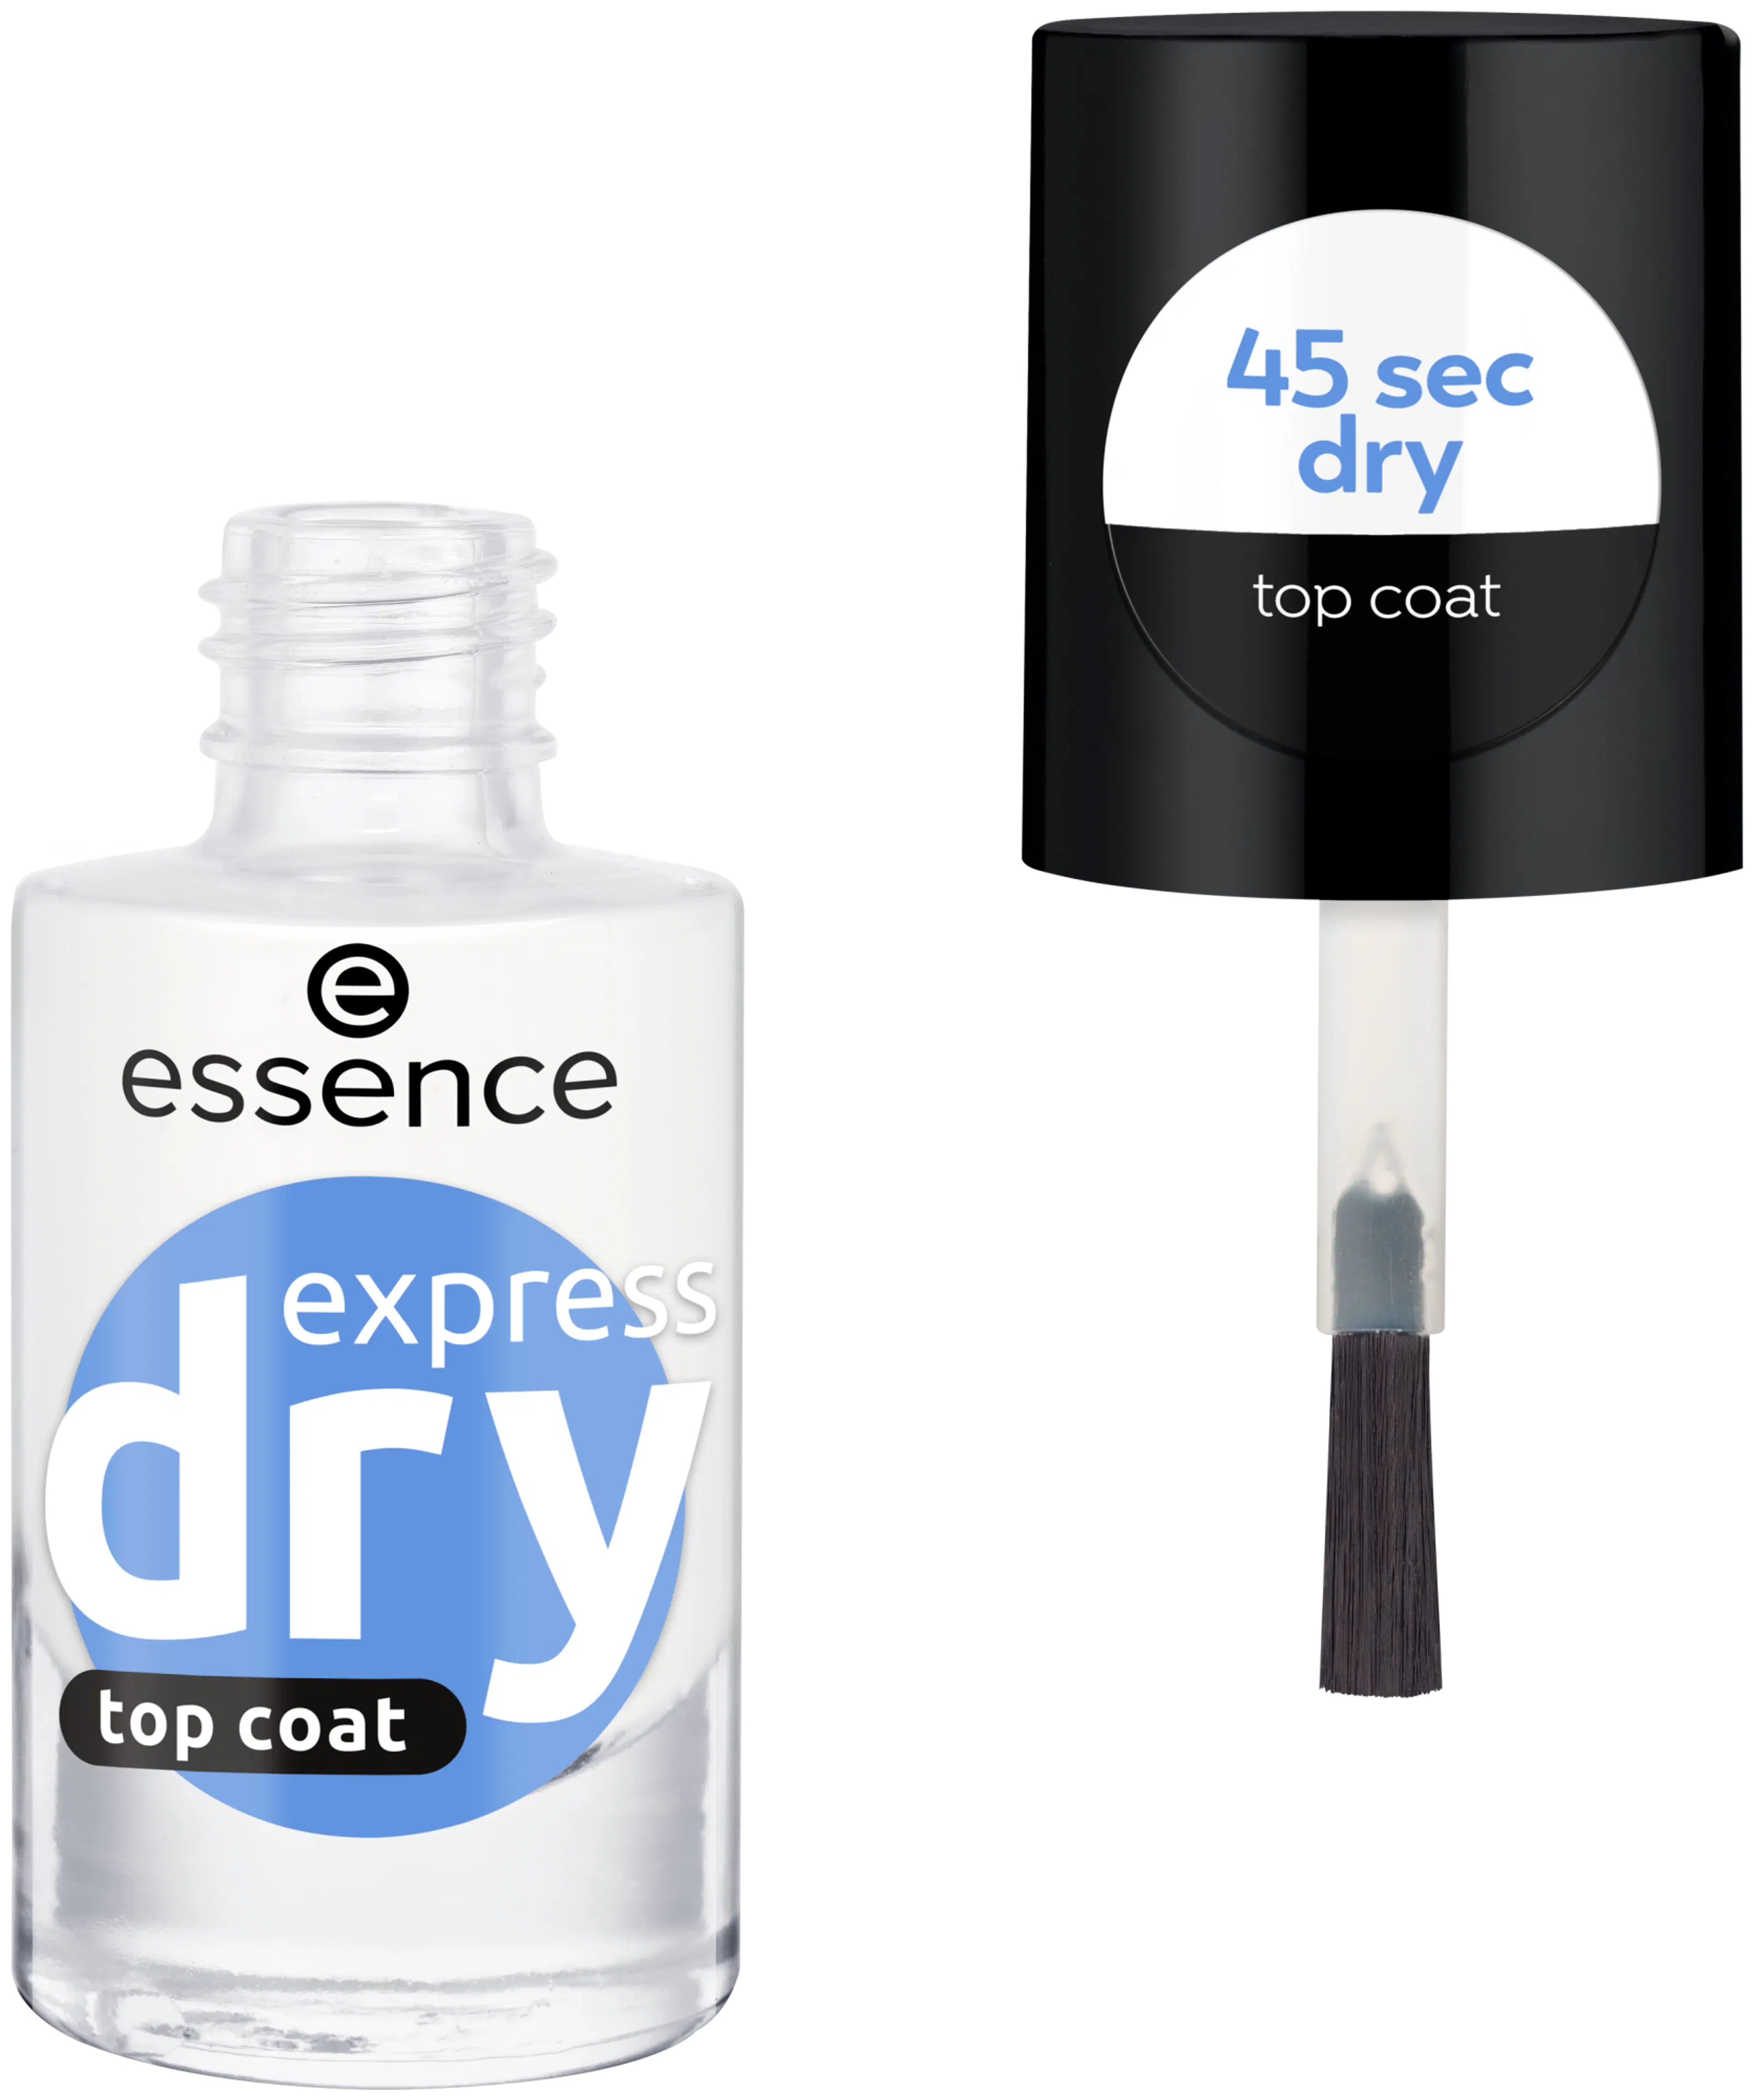 essence express dry päällyslakka